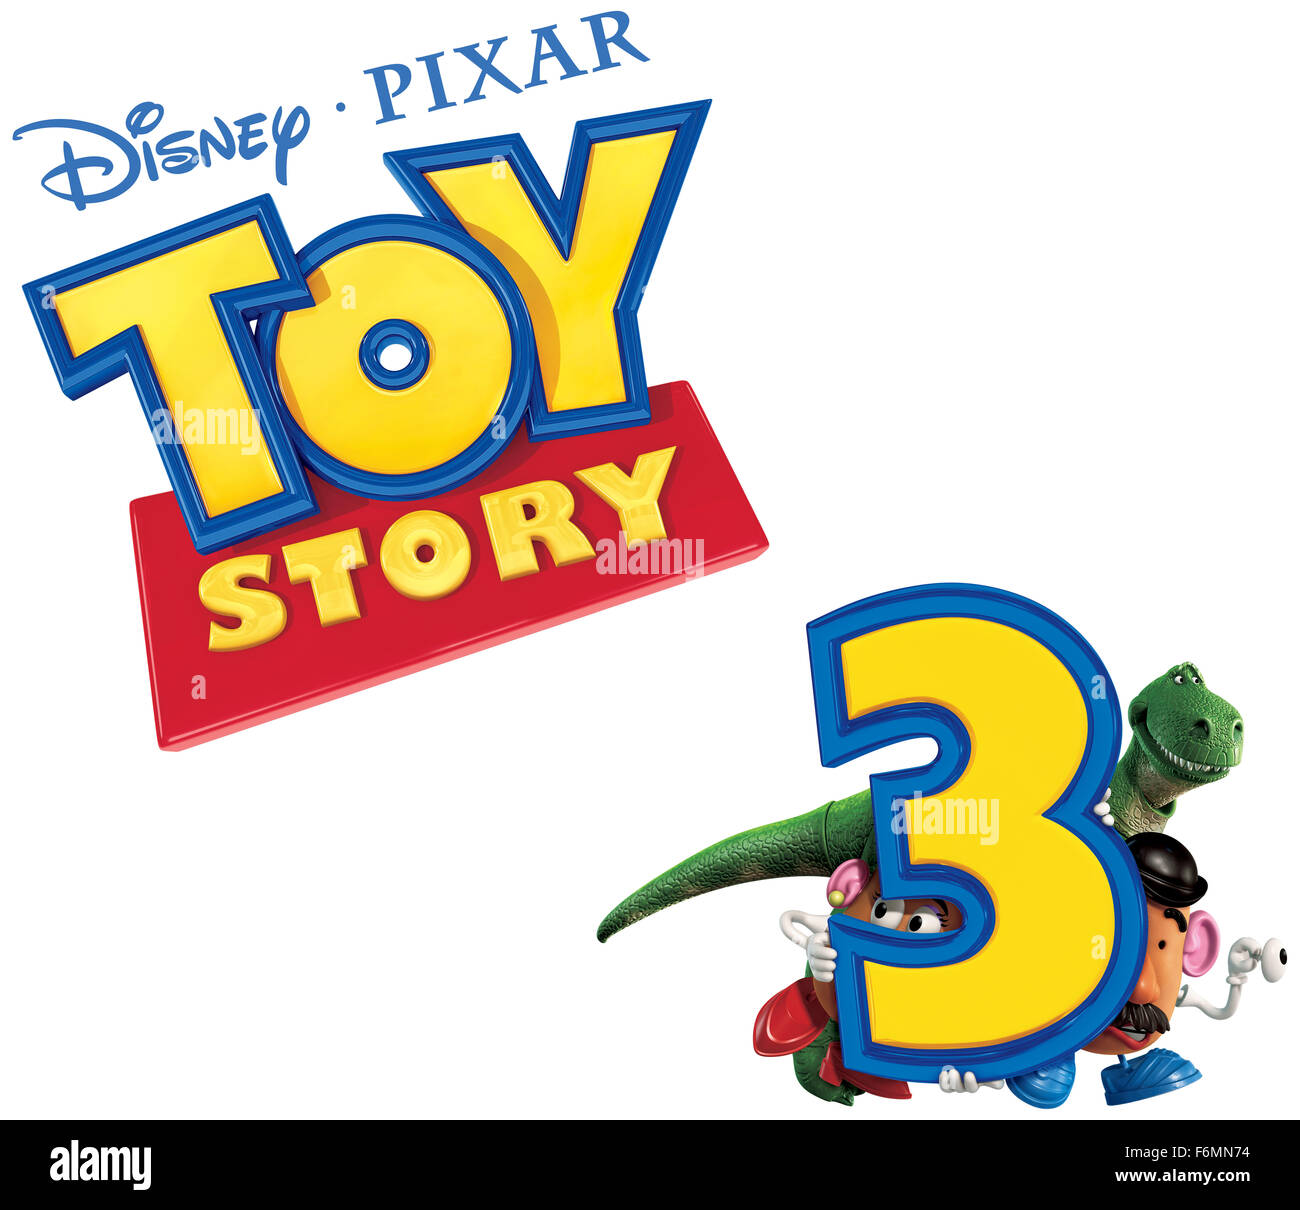 Toy story poster fotografías e imágenes de alta resolución - Alamy